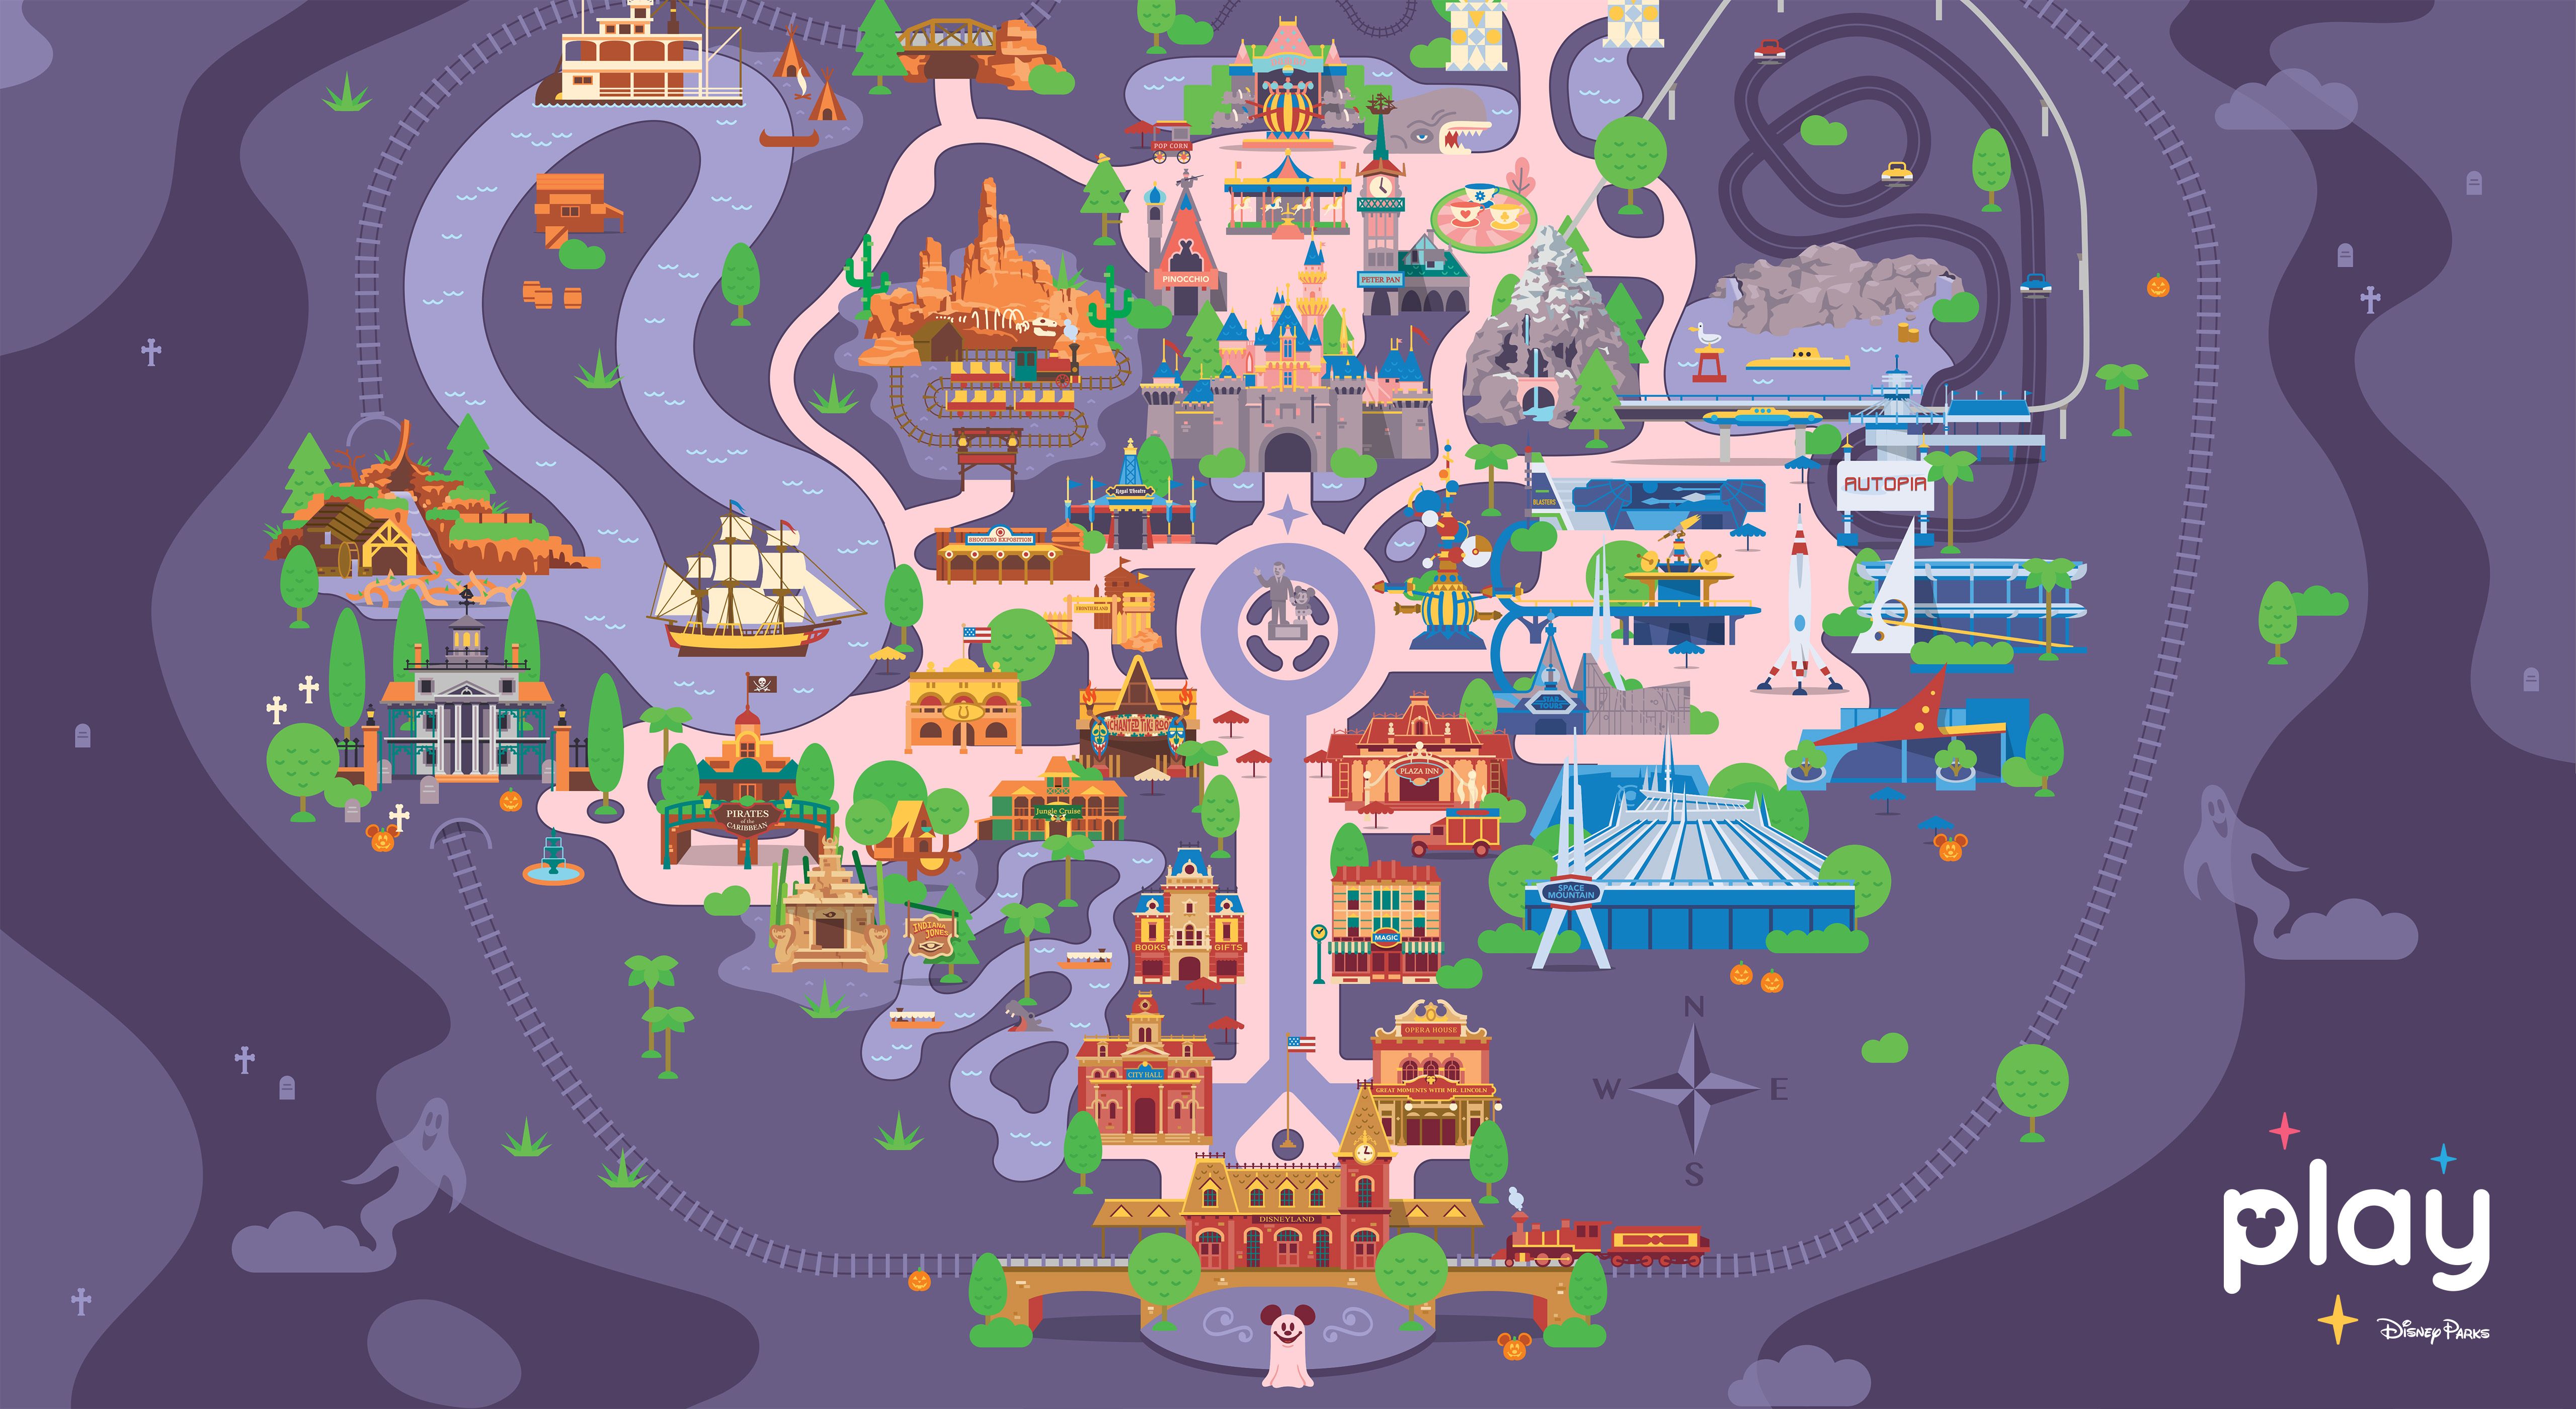 Play Disney Parks' Wallpaper